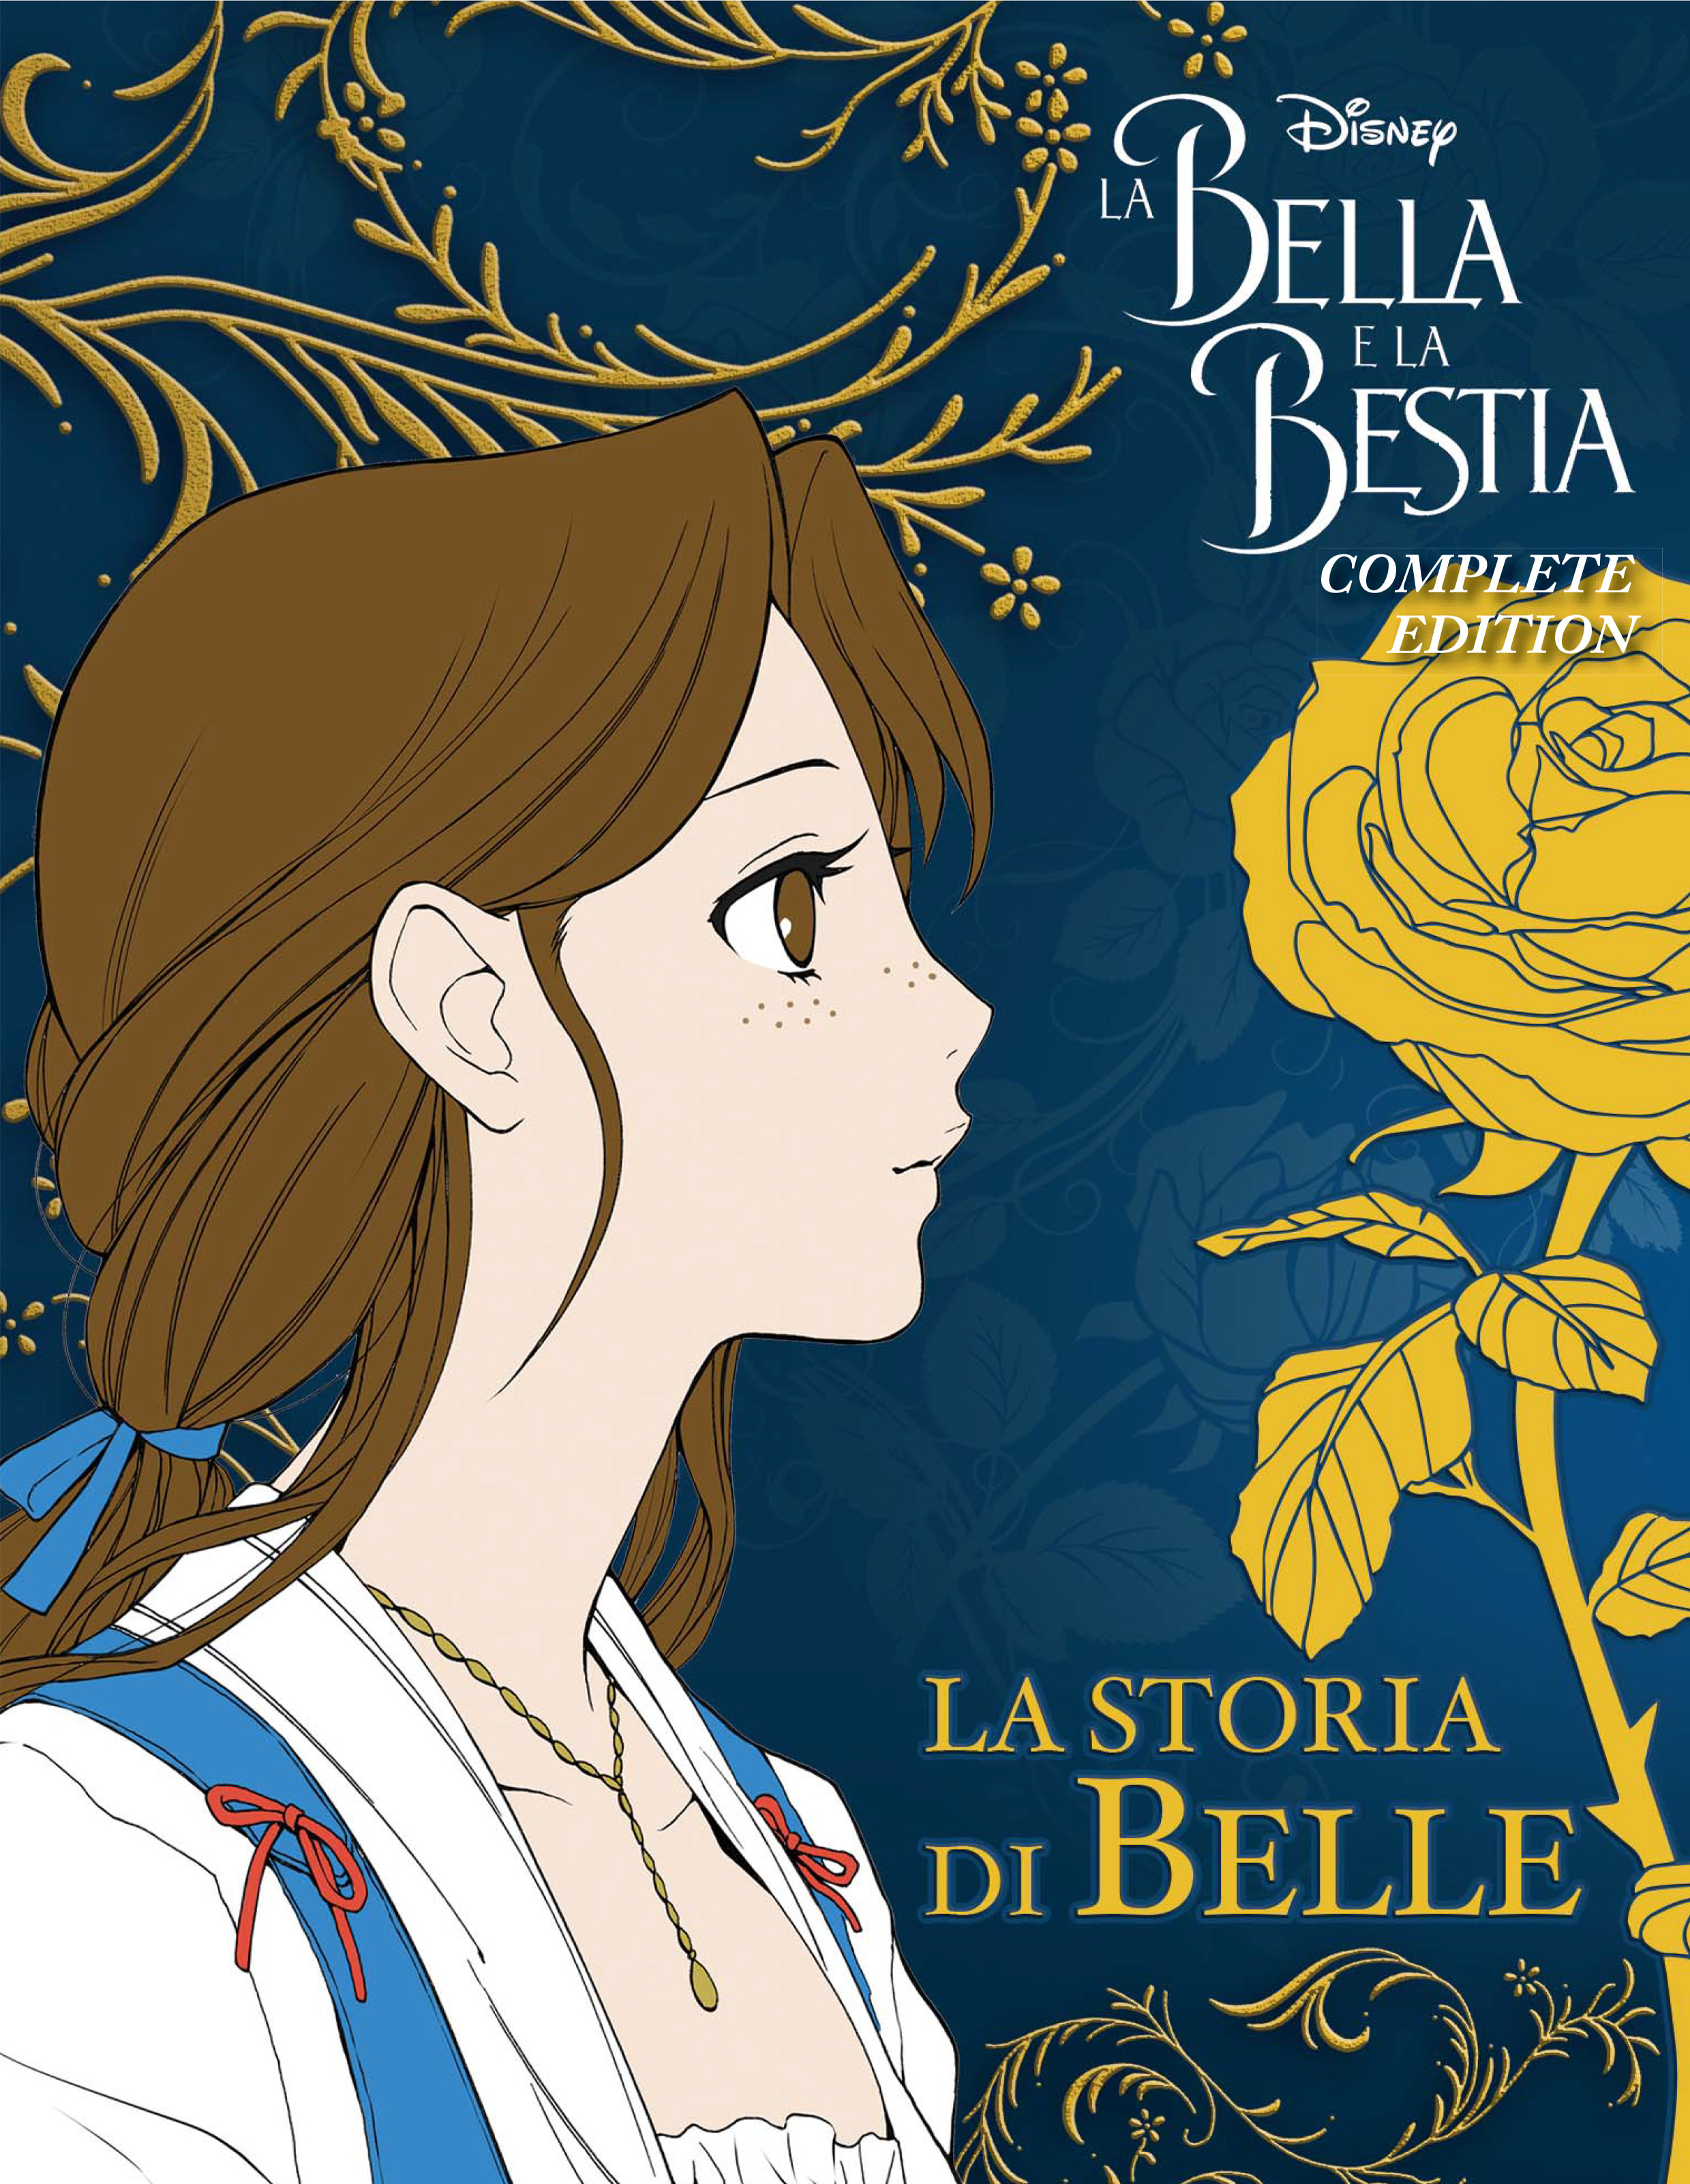 La Bella la Bestia Complete Edition scvr BELLE Serial Gamer